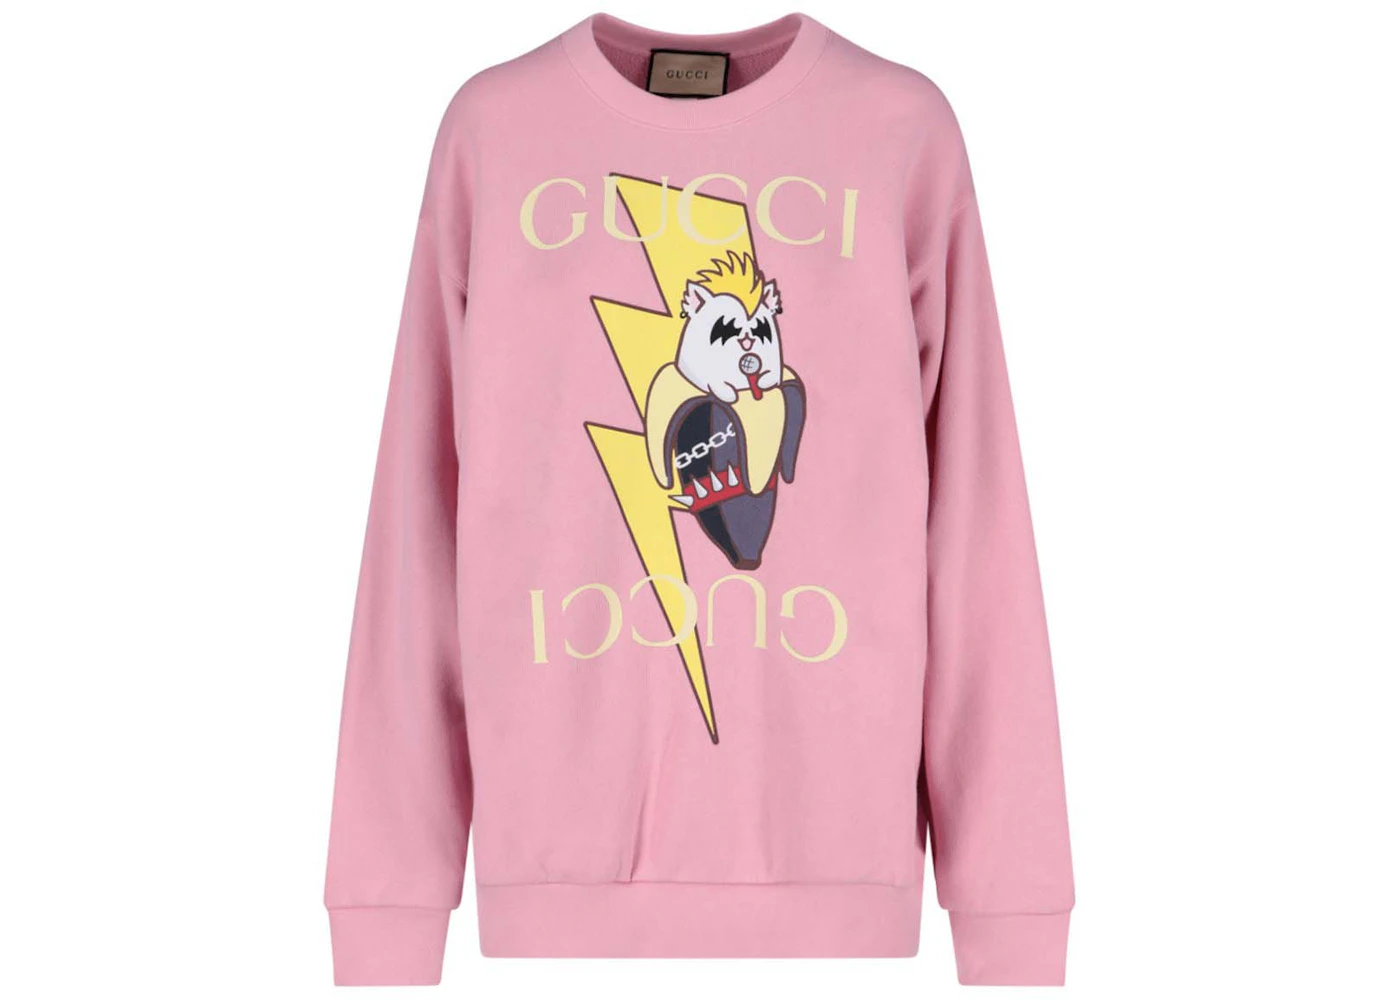 Gucci x Bananya Printed Sweatshirt Pink